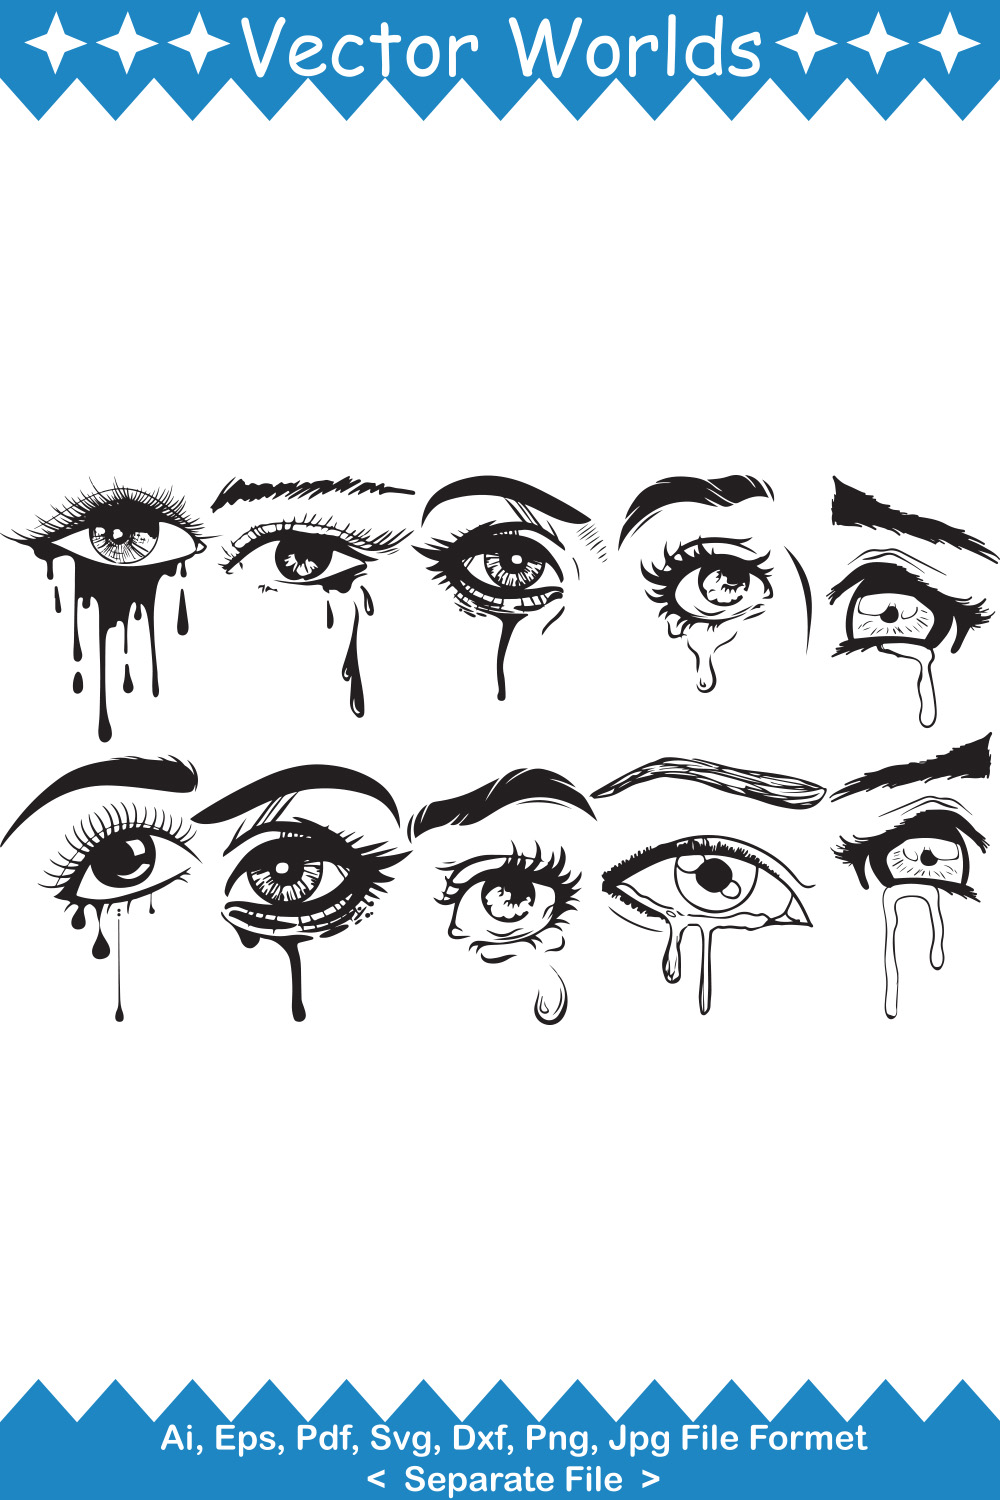 Set of unique crying eye images